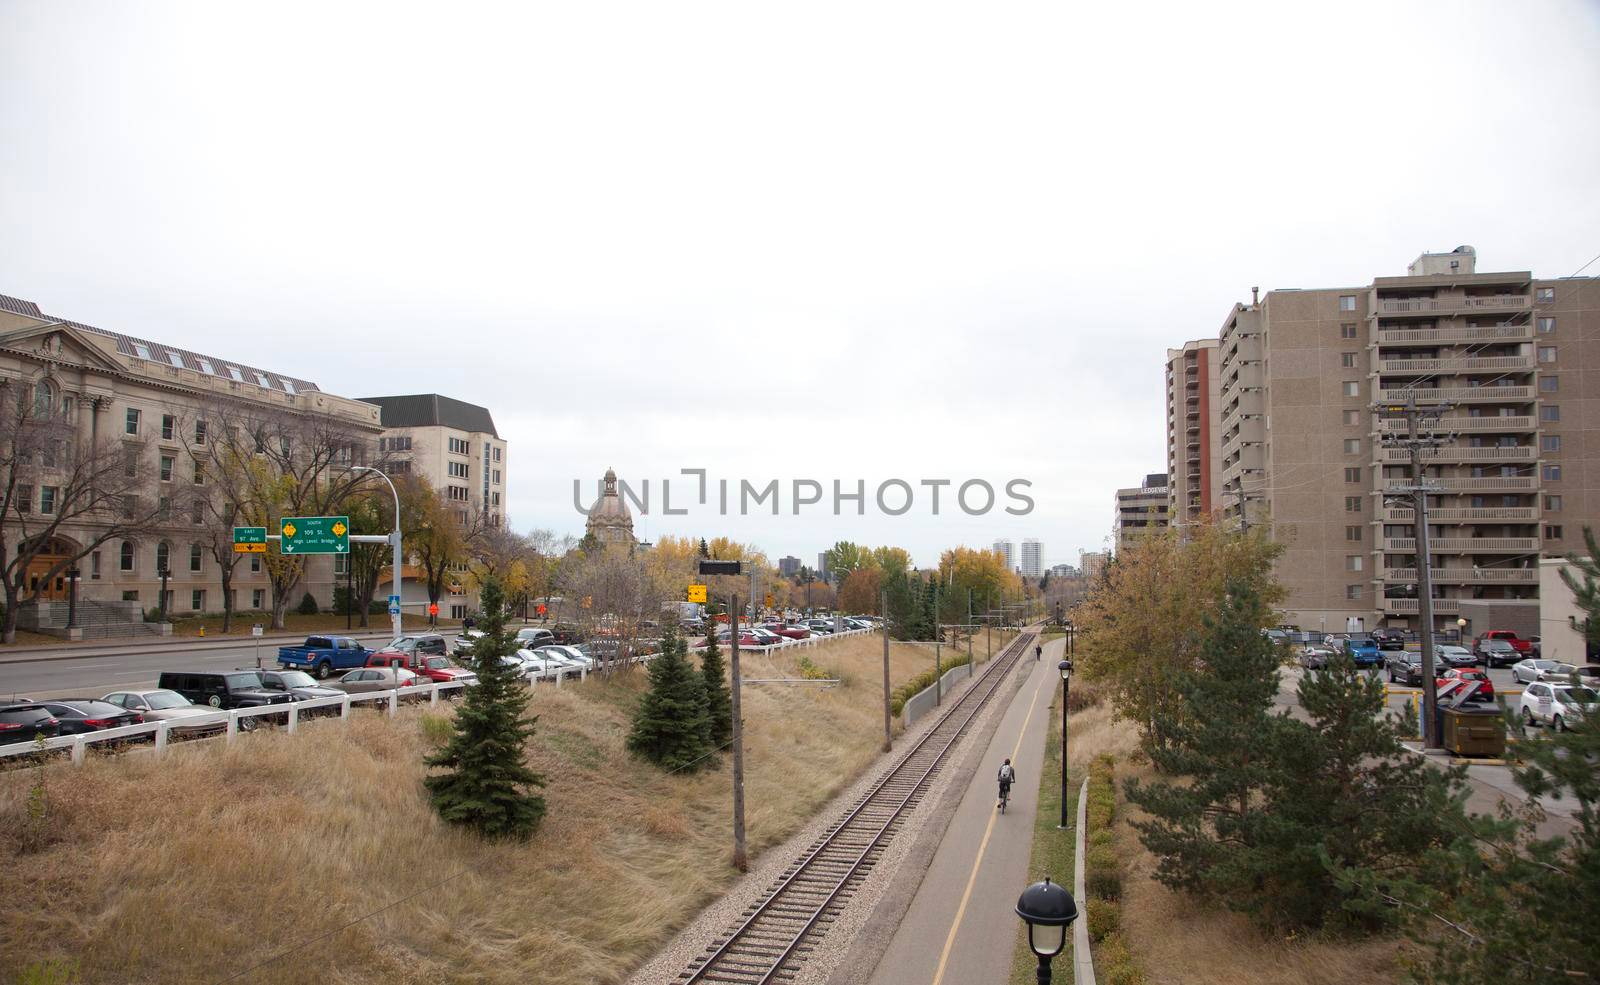  On October 6, 2017: editorial view of downtown Edmonton, Alberta near the Bowker Building and legislature 